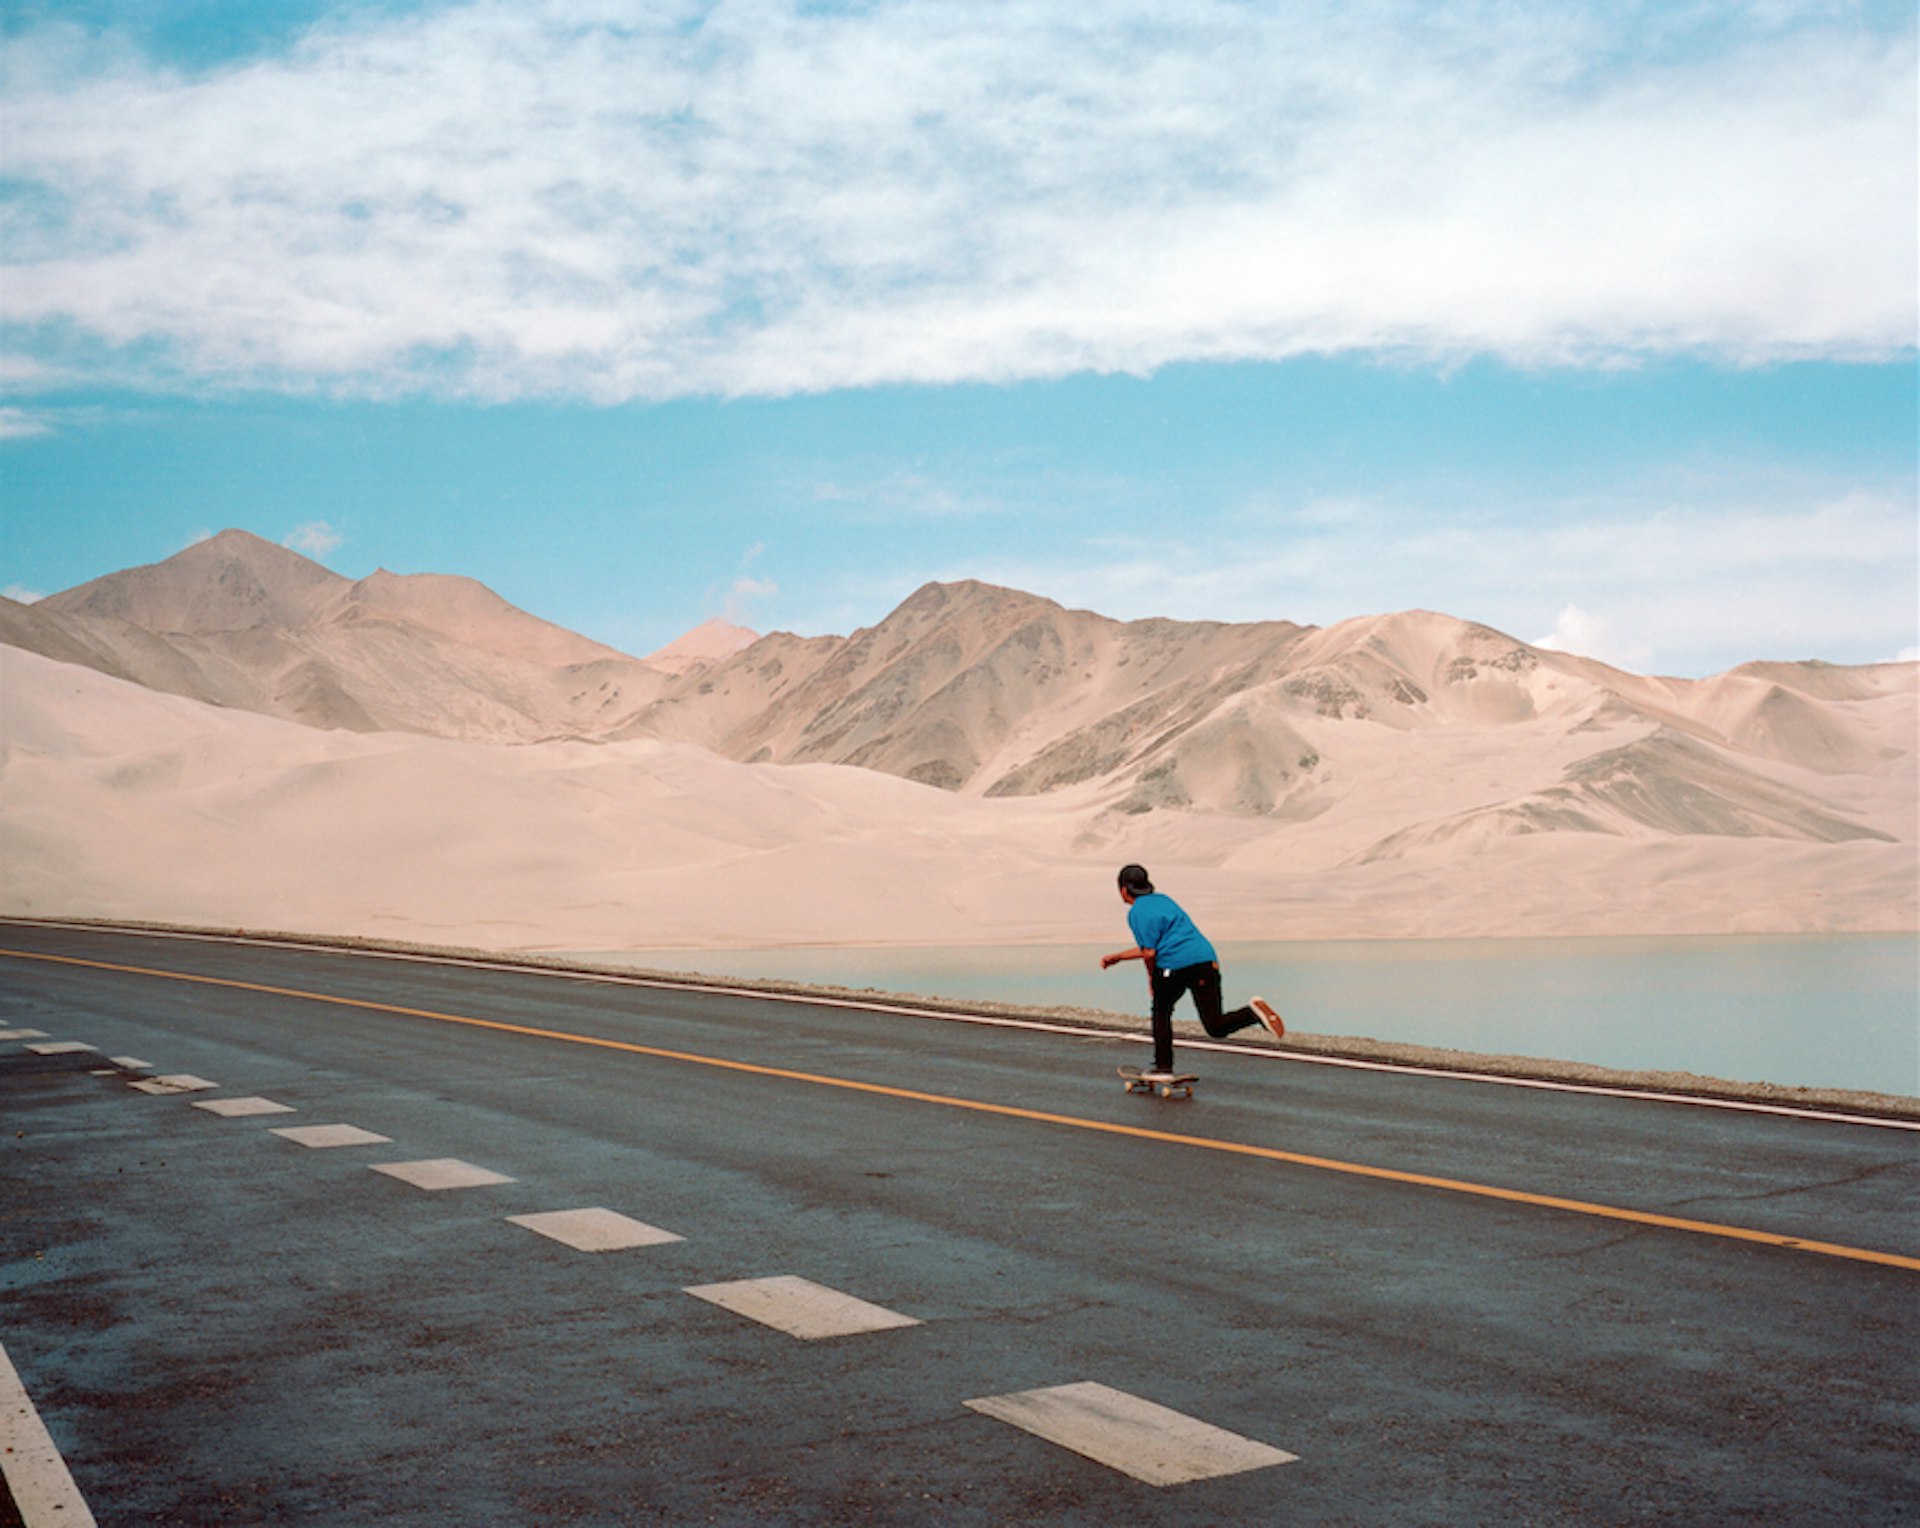 Xinjiang Skate. By Terry Xie.